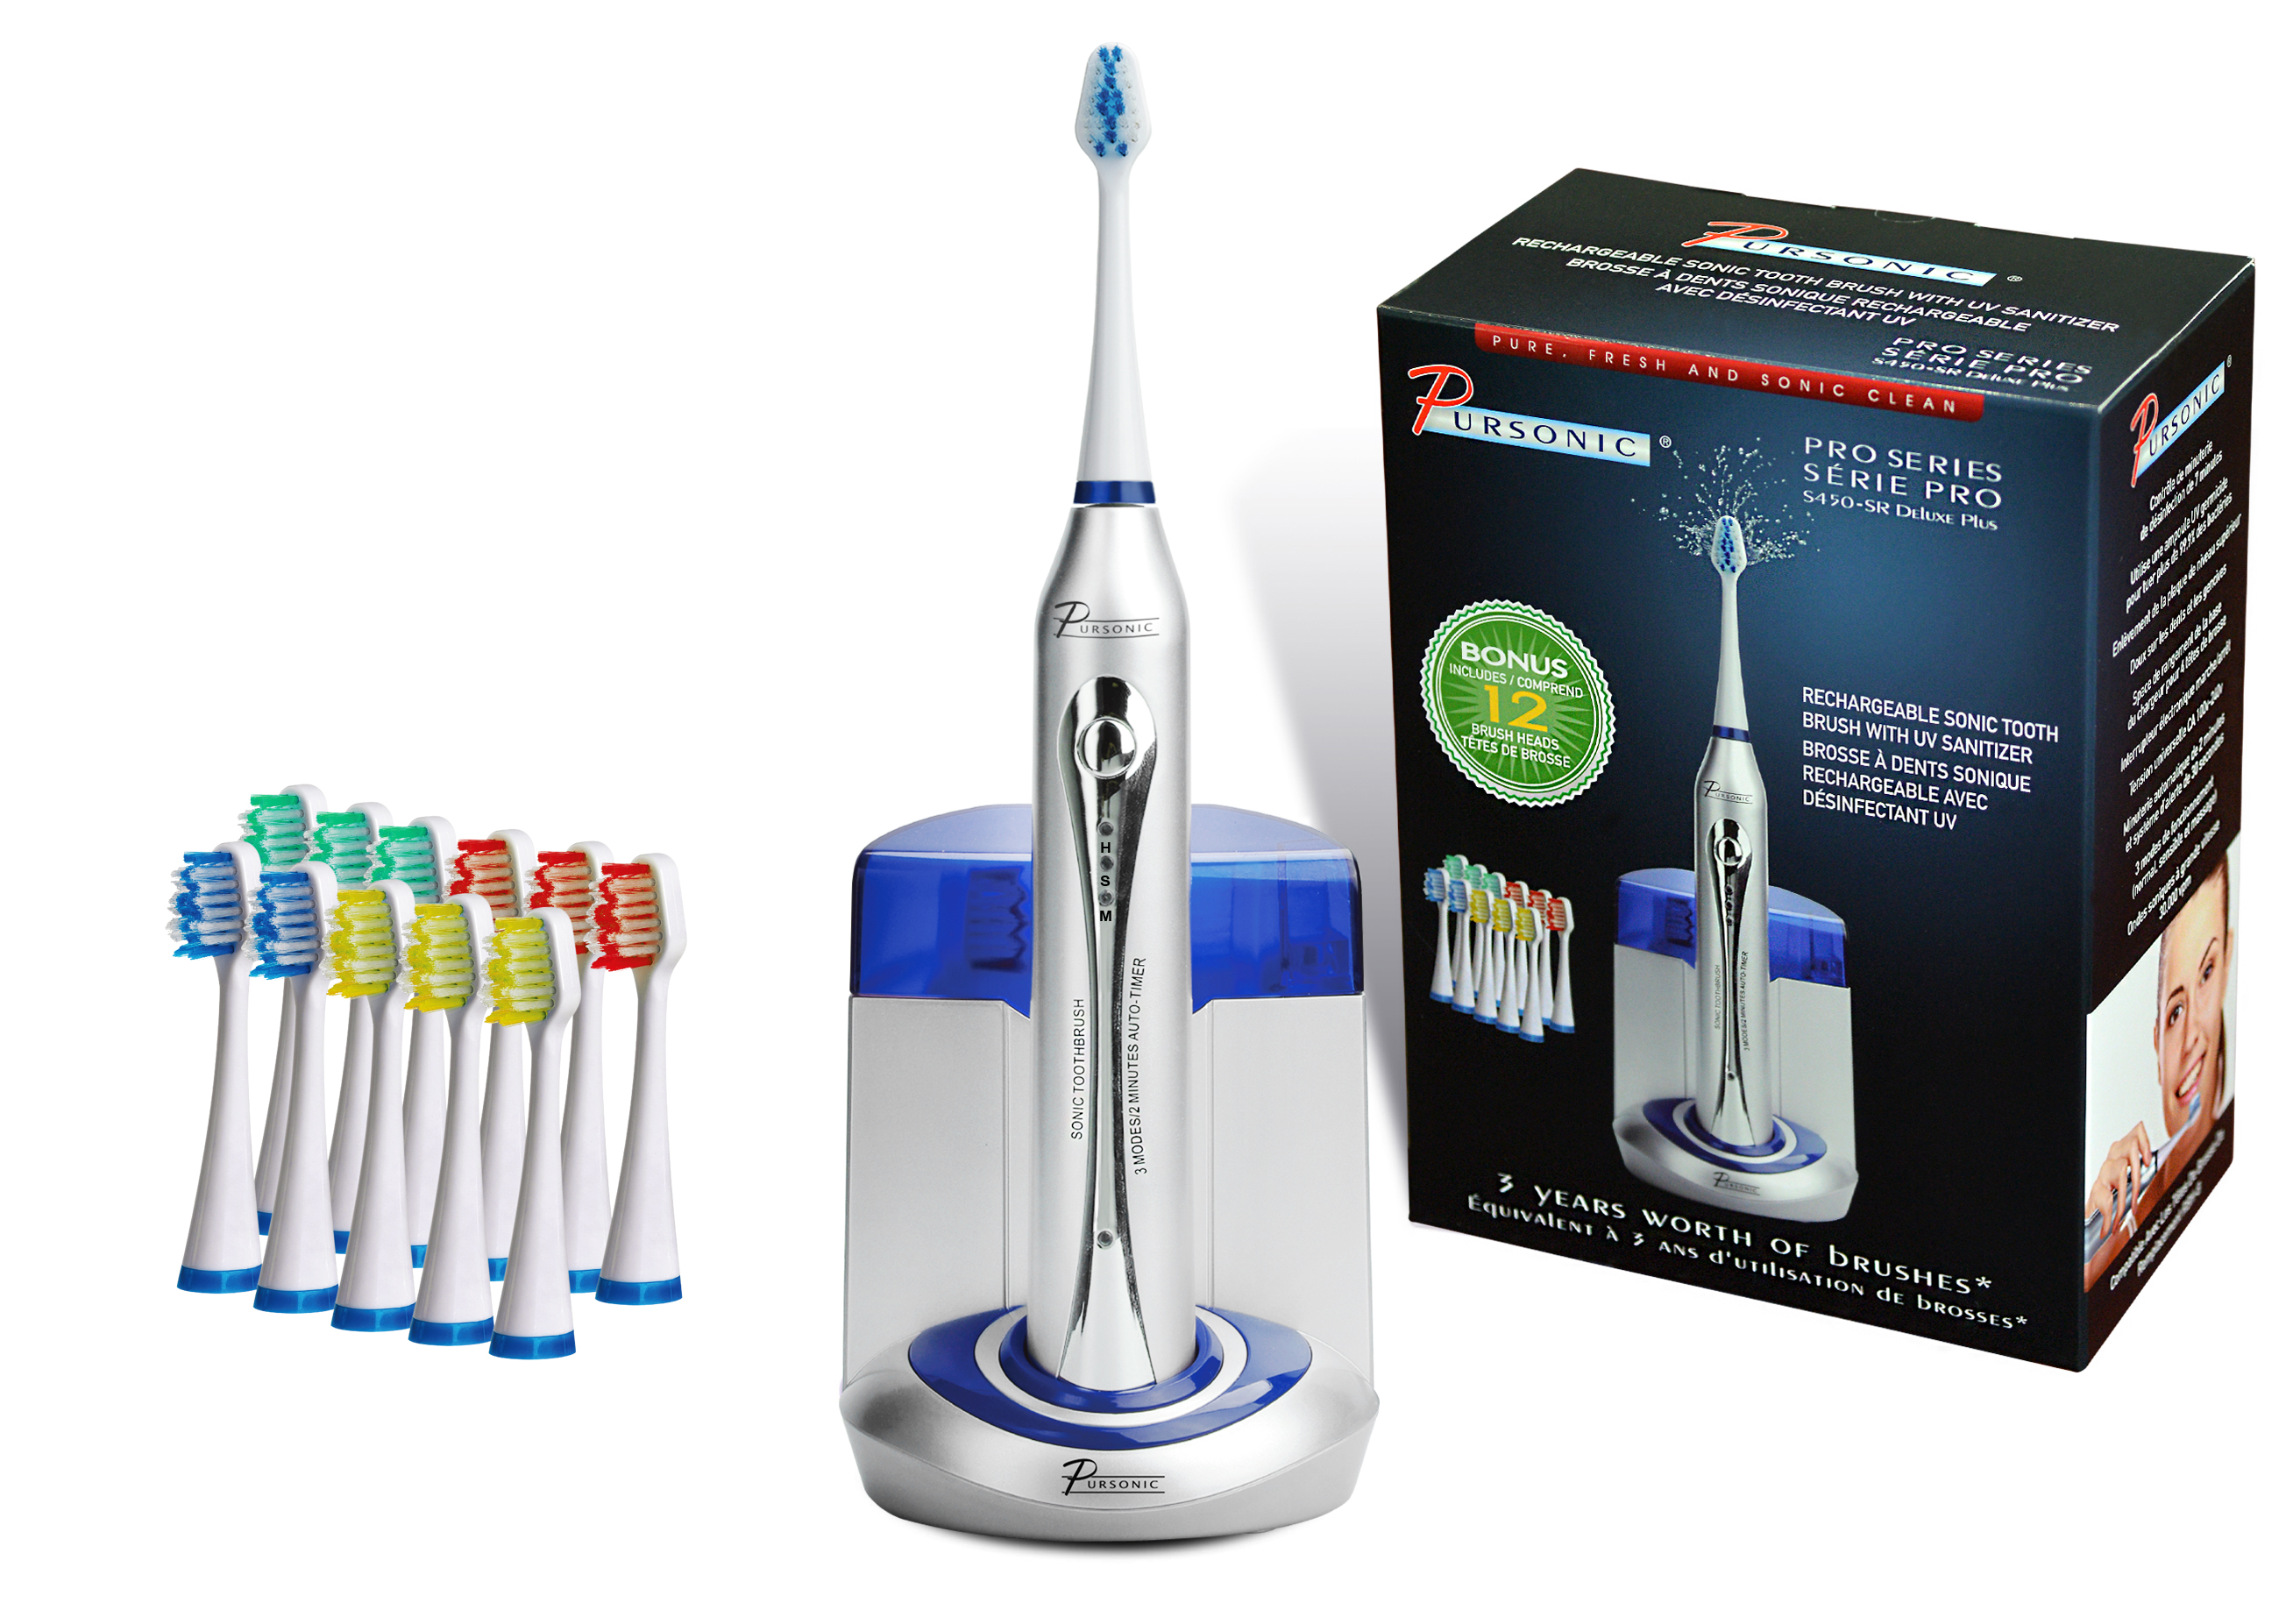 Pursonic sonic toothbrush with uv function with bonus 12 brush heads - image 3 of 4